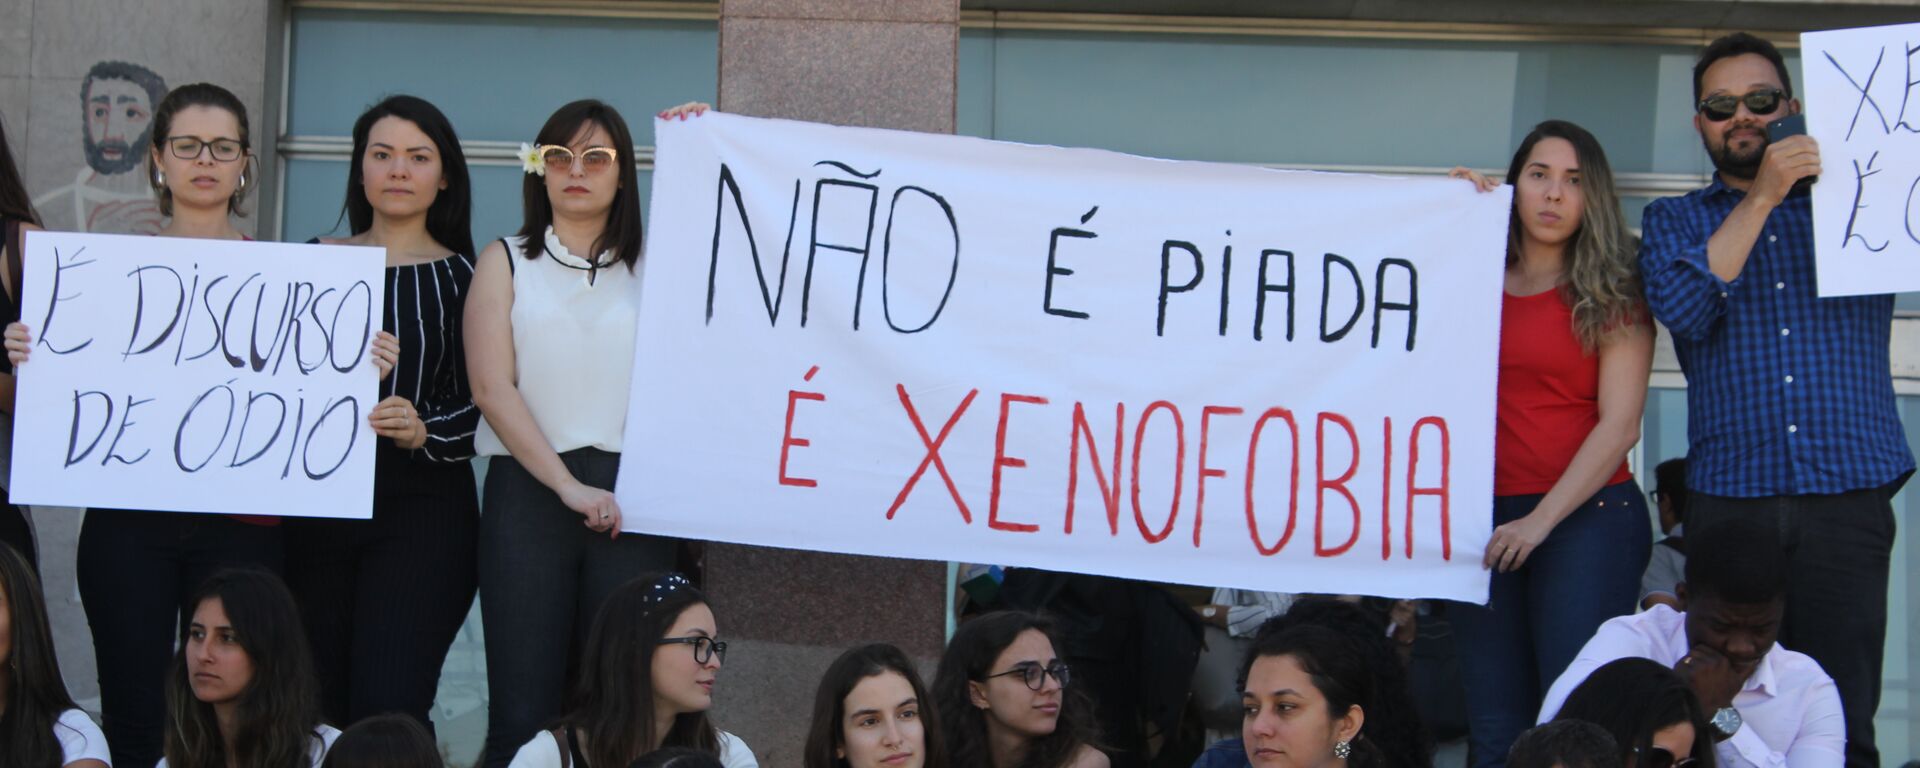 Participantes do protesto condenando a xenofobia contra alunos brasileiros da Faculdade de Direito da Universidade de Lisboa (foto de arquivo) - Sputnik Brasil, 1920, 23.04.2021